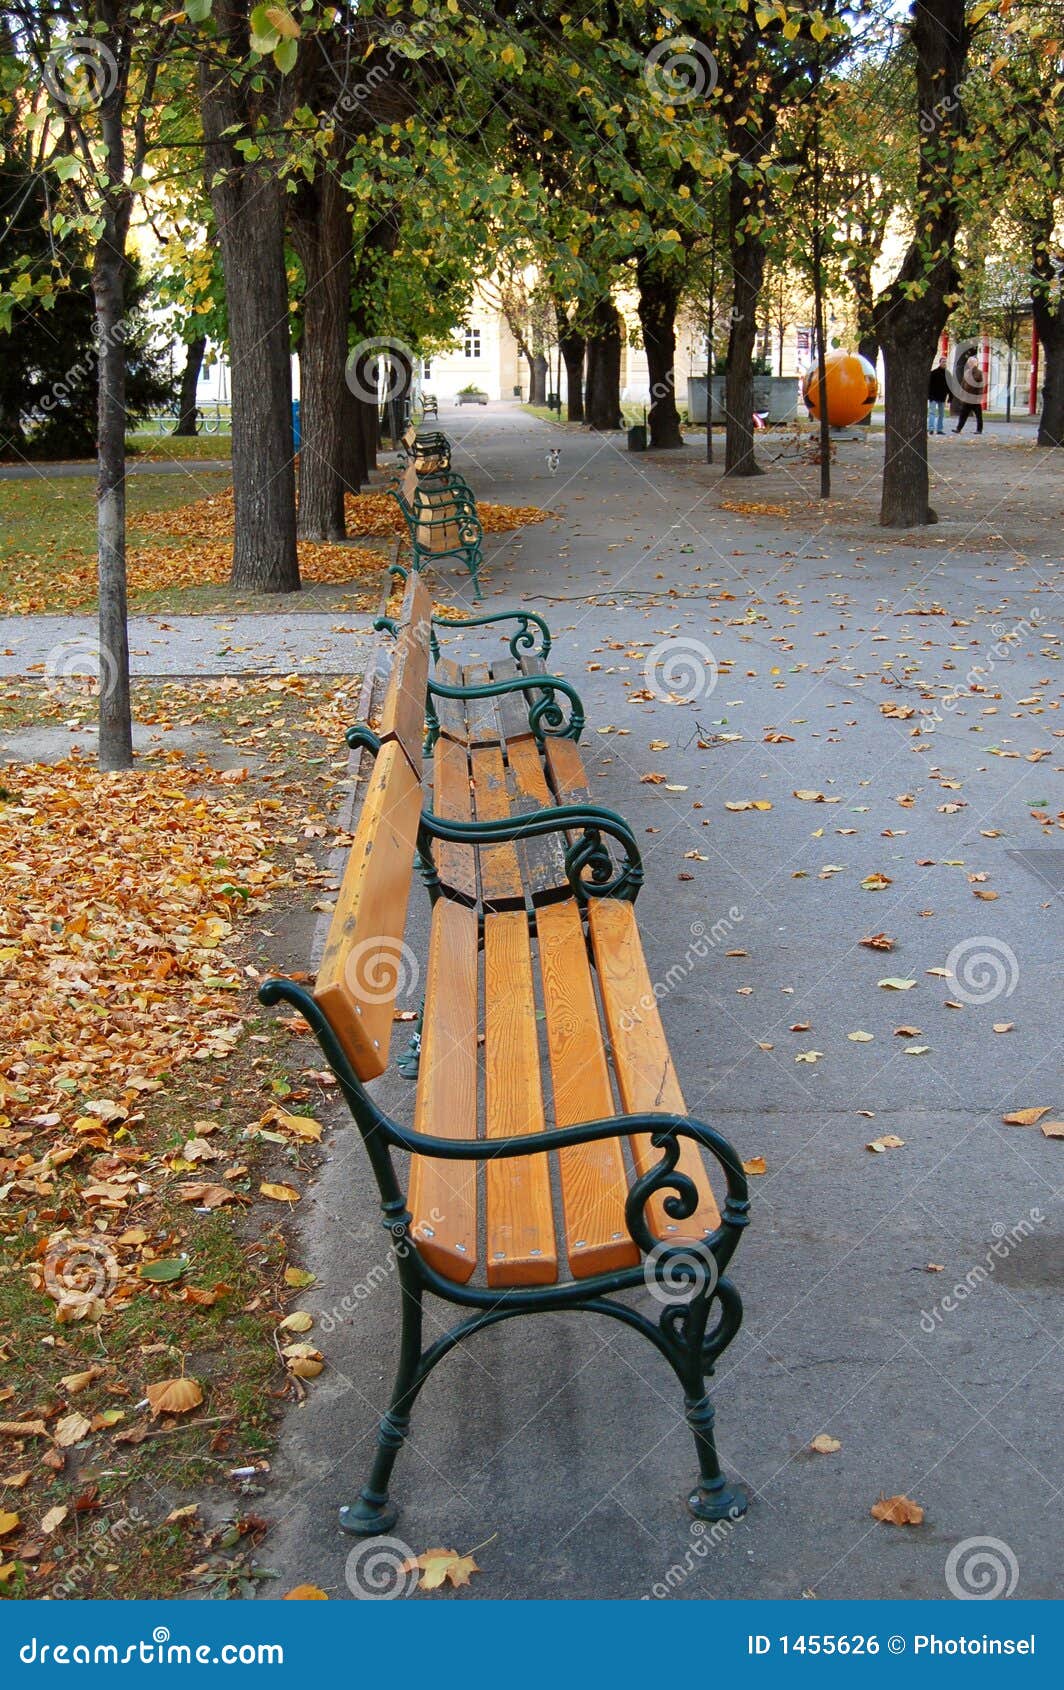 park benches, autumn